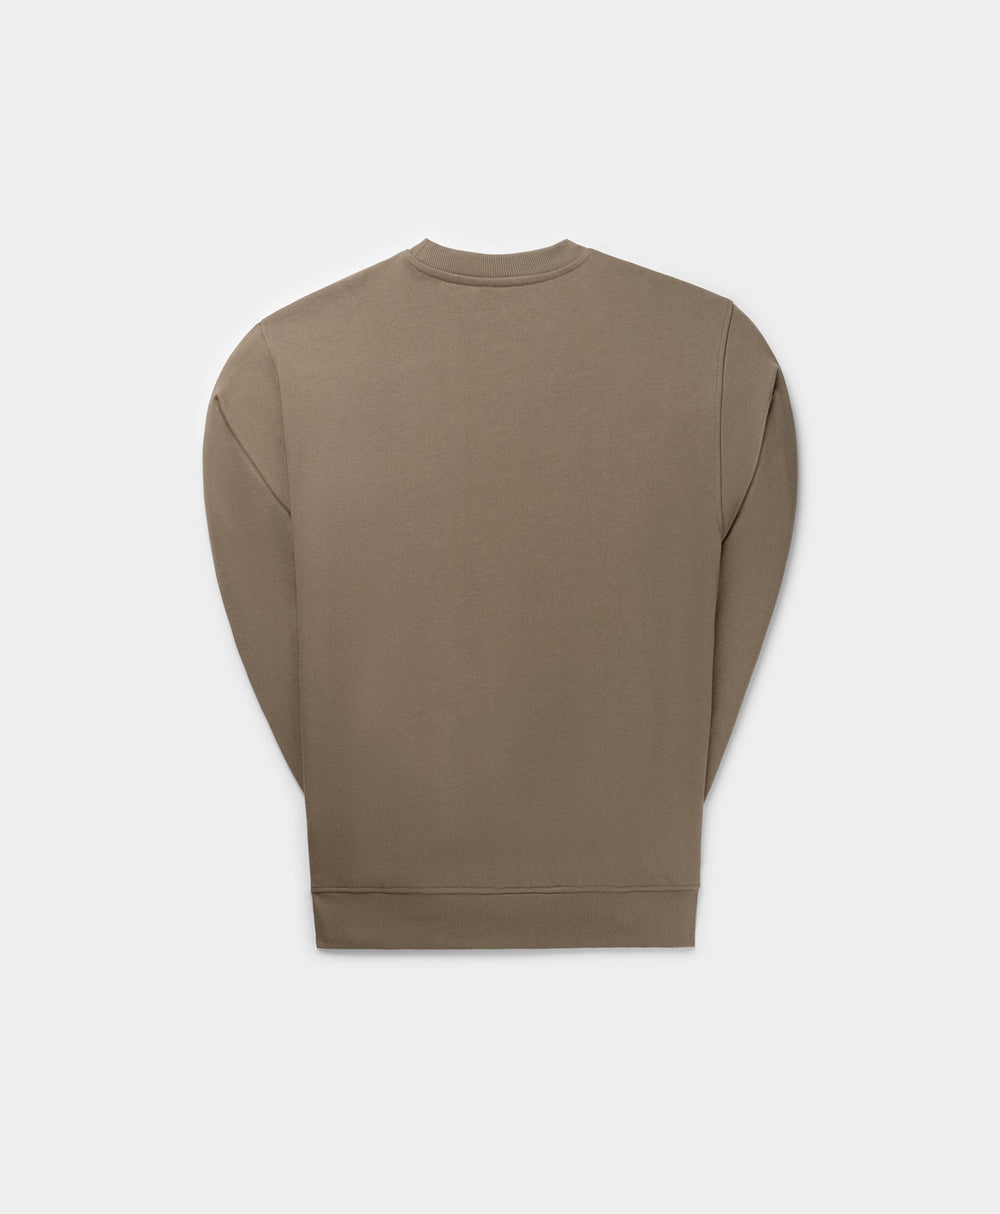 DP - Iron Taupe Rashad Sweater - Packshot - Rear